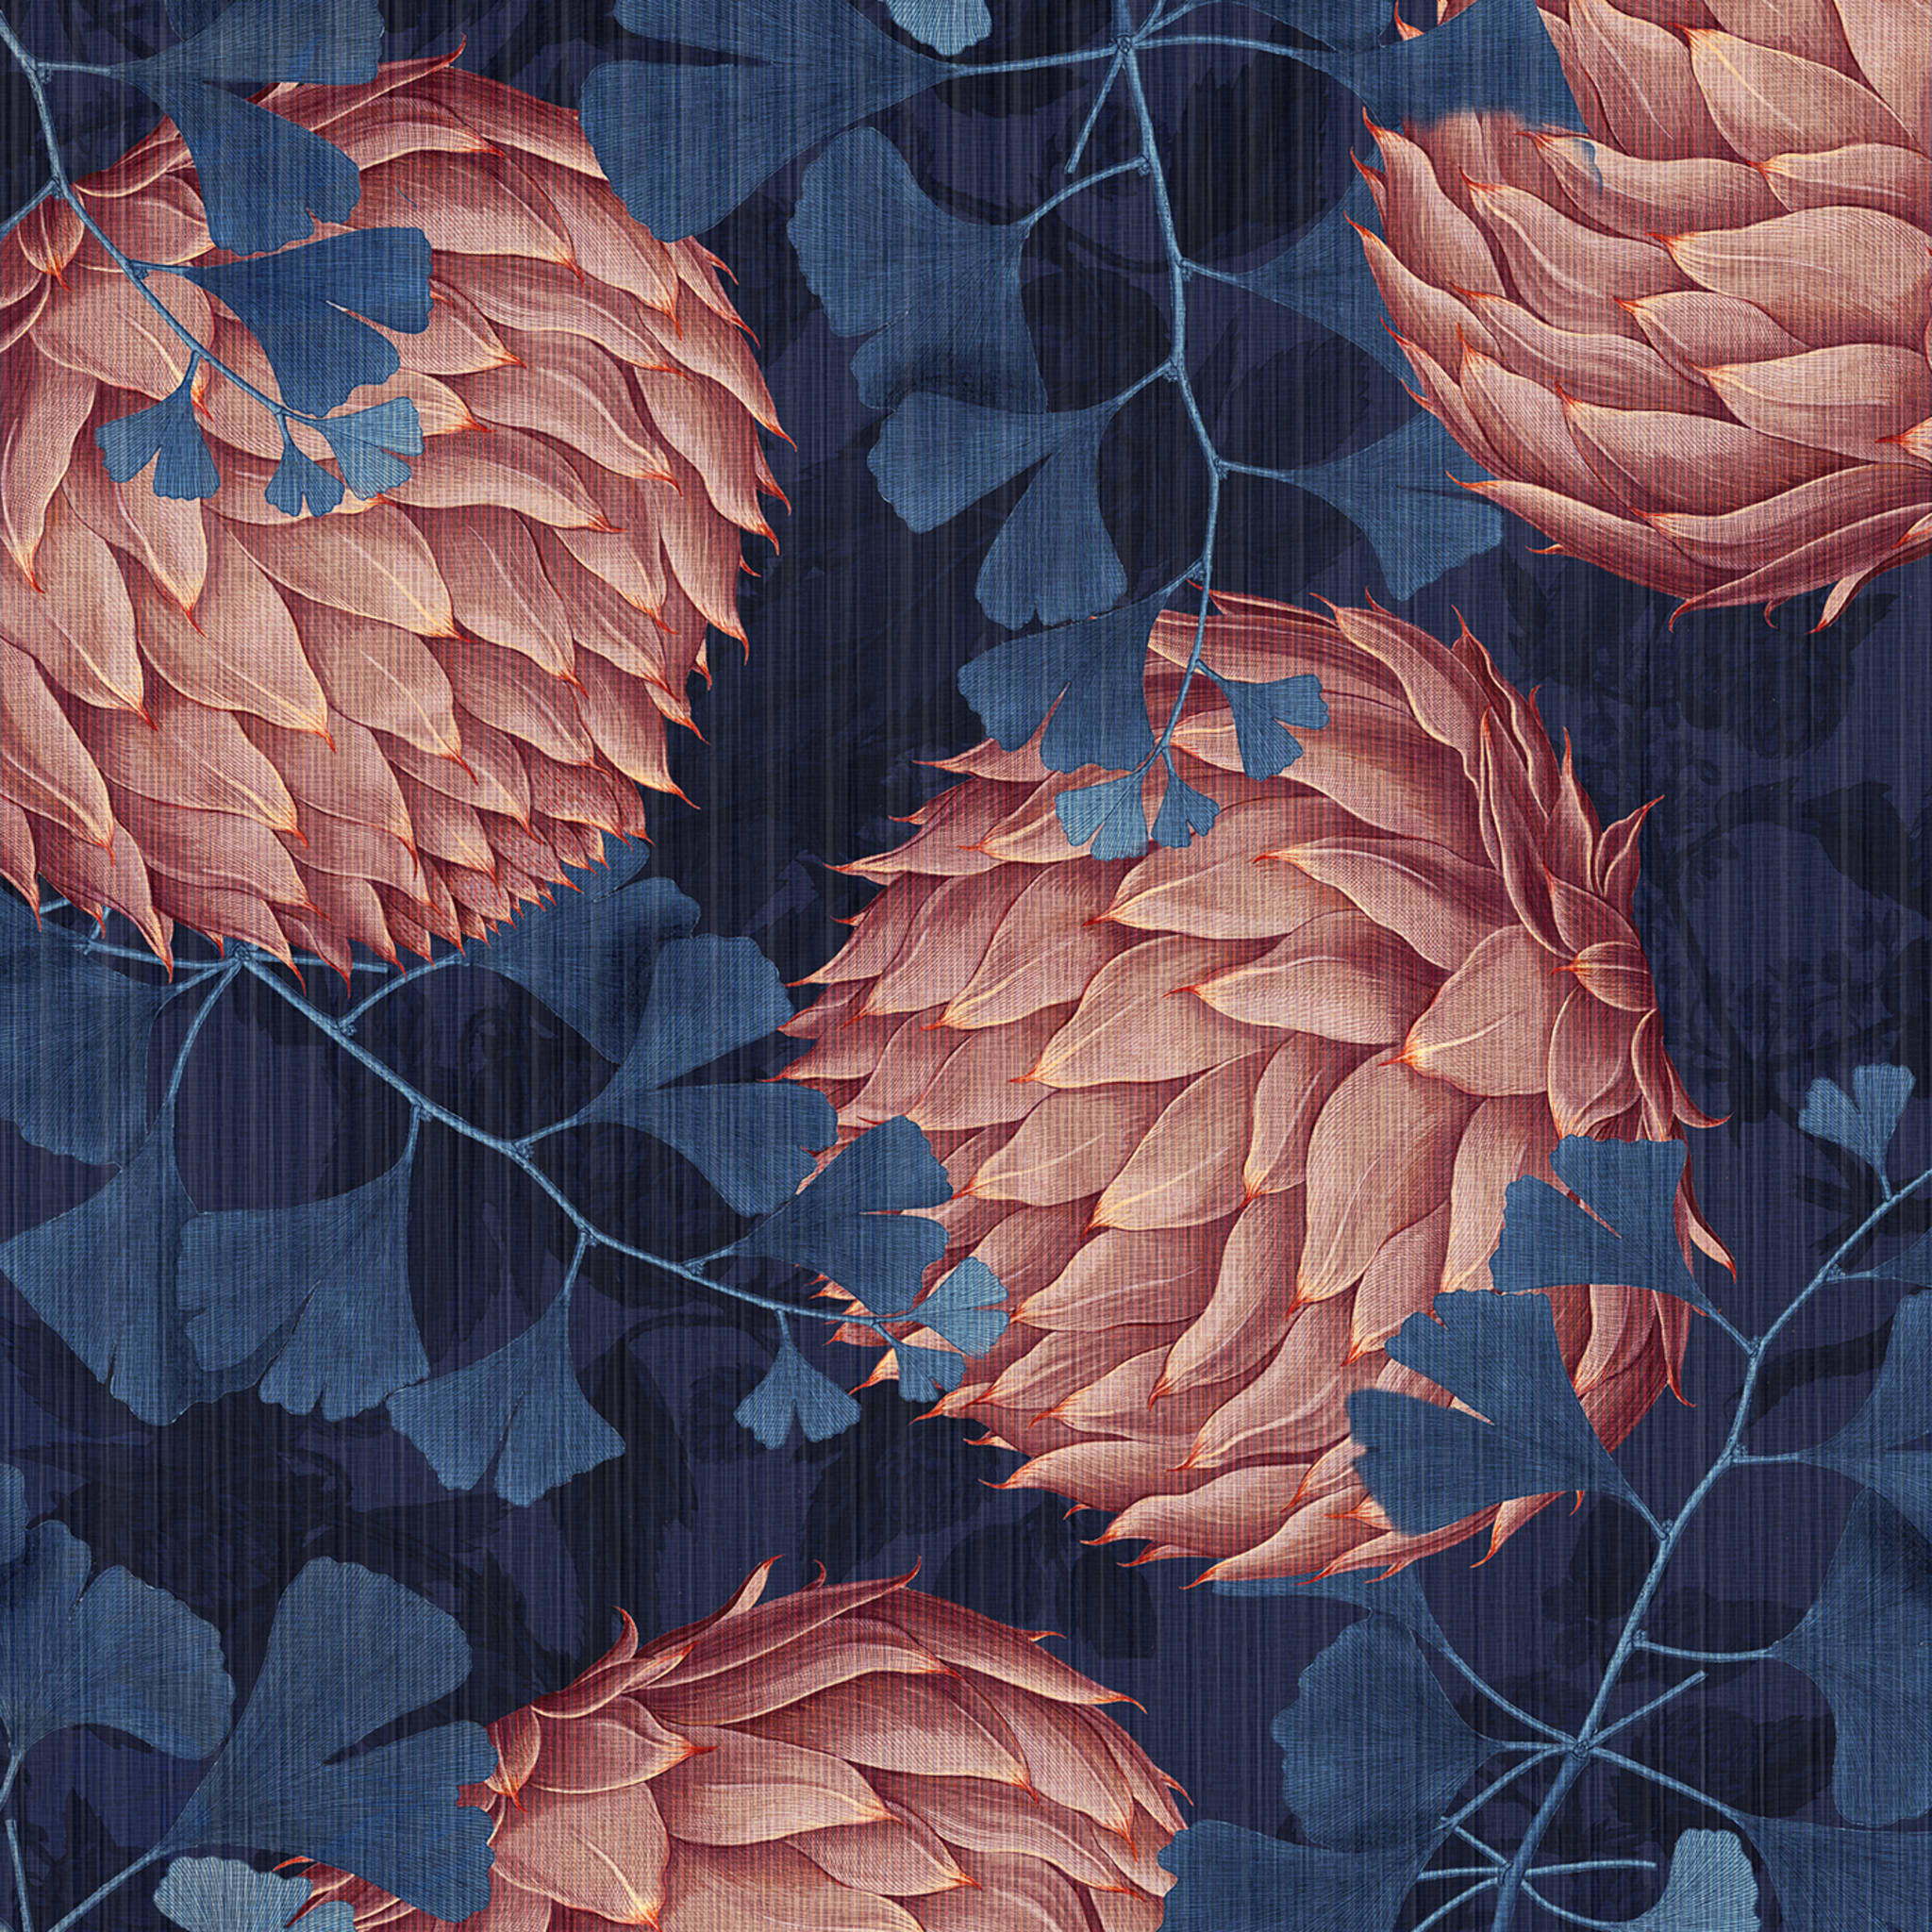 Giant Artichoke Wallpaper by Vzn Studio - Alternative view 1